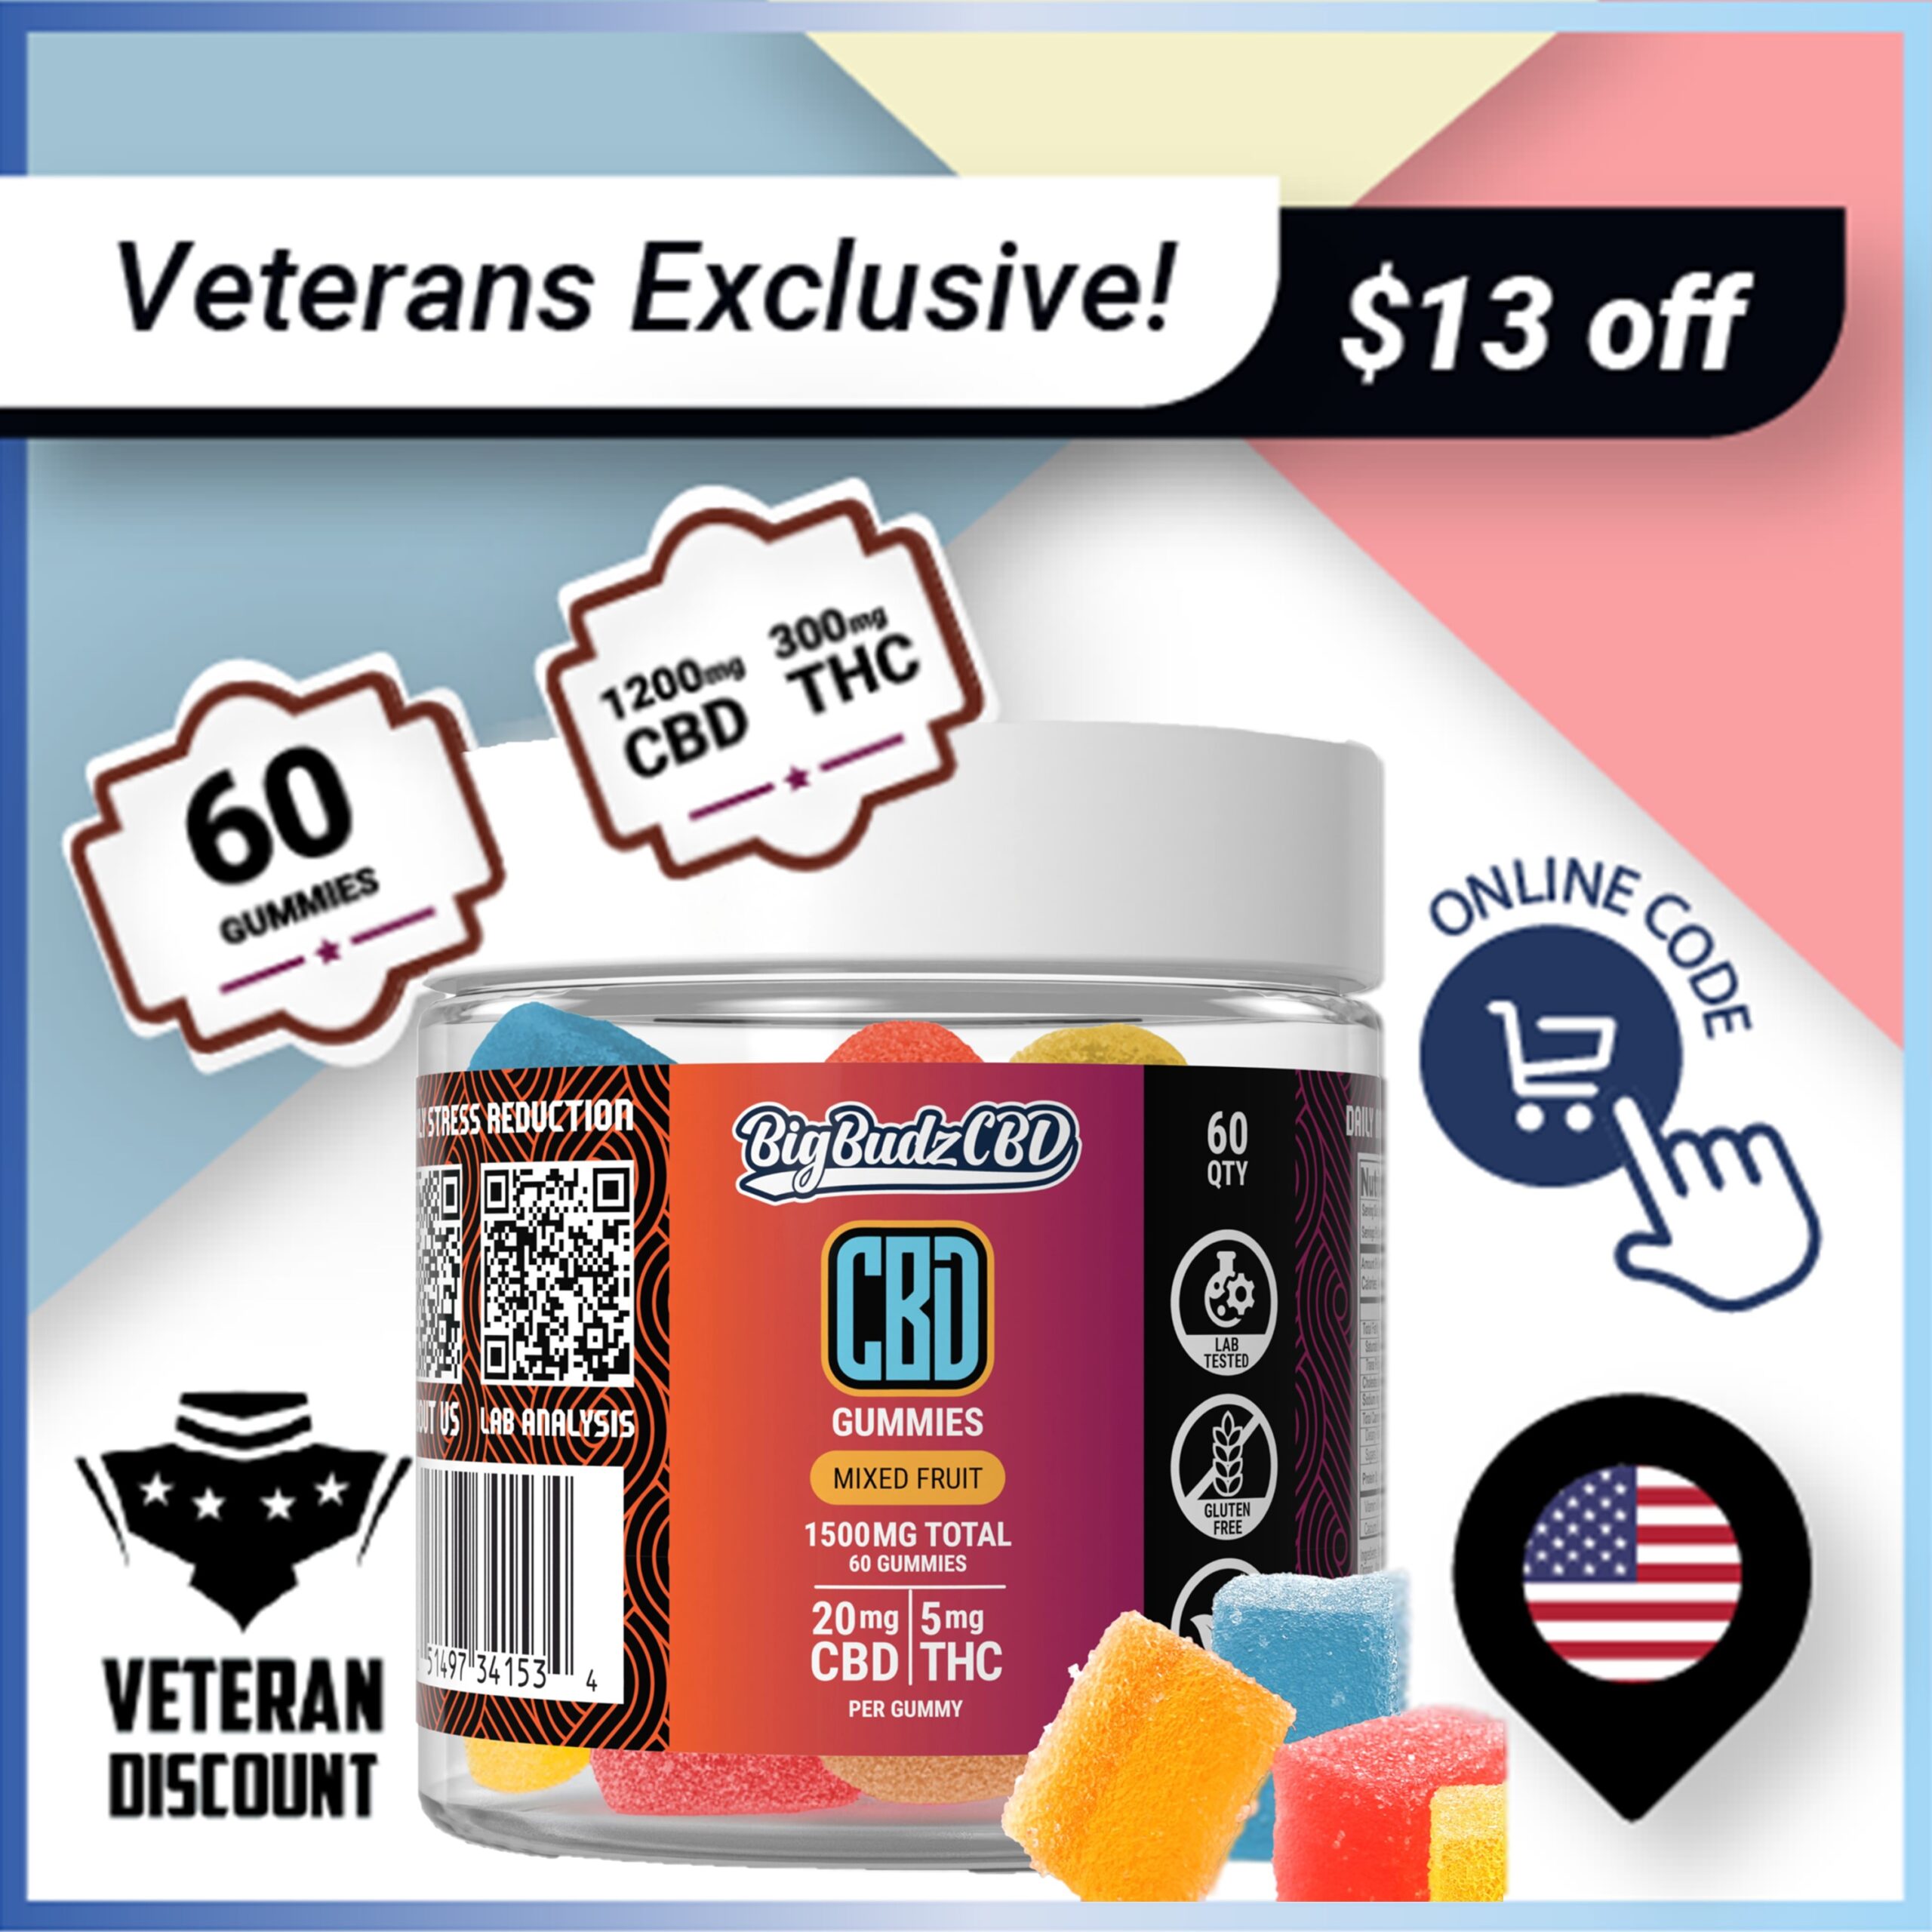 (veteran discount coupon) 60 count FSO gummies $13 off